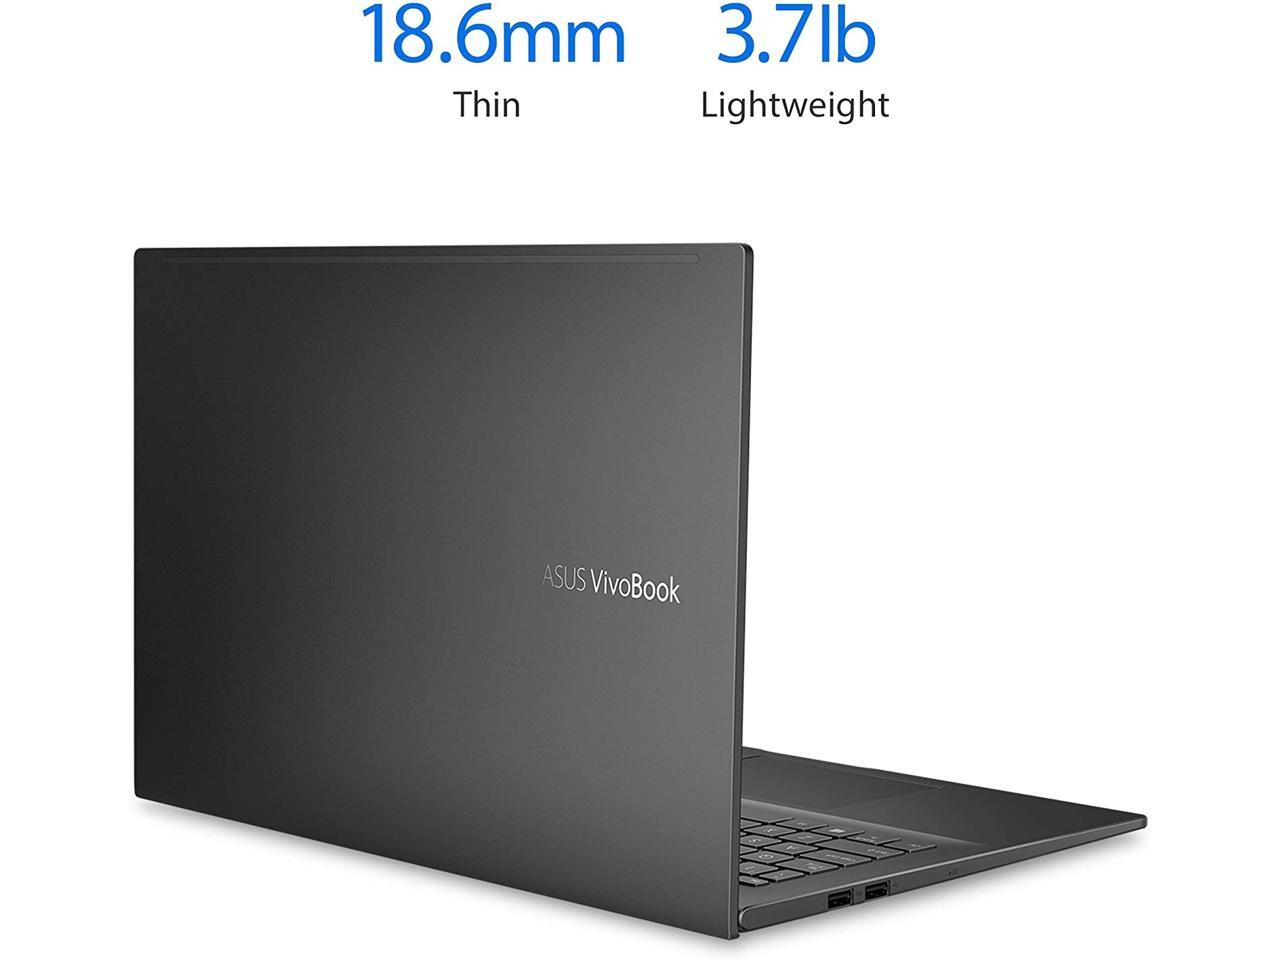 2020 Asus VivoBook 15 S513 15.6" FHD Premium Thin & Light Laptop, AMD 4th Gen Ryzen 7 4700U, 8GB RAM, 1TB PCIe SSD, Backlit Keyboard, Fingerprint Reader, WIFI 6, HDMI, USB-C, Windows 10 Home